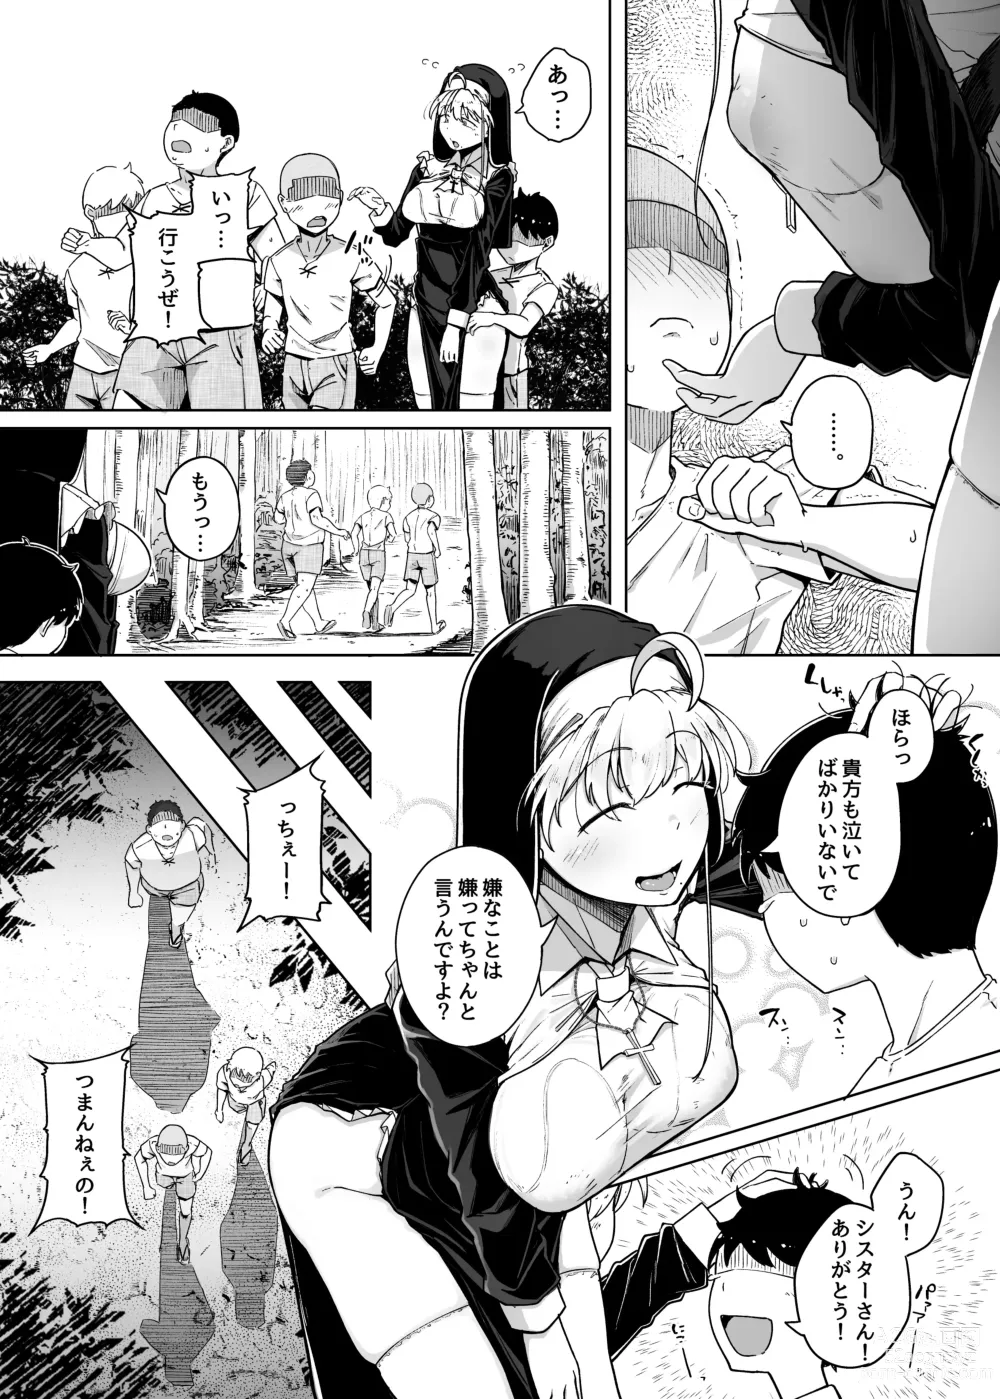 Page 7 of doujinshi Zange Ana 3